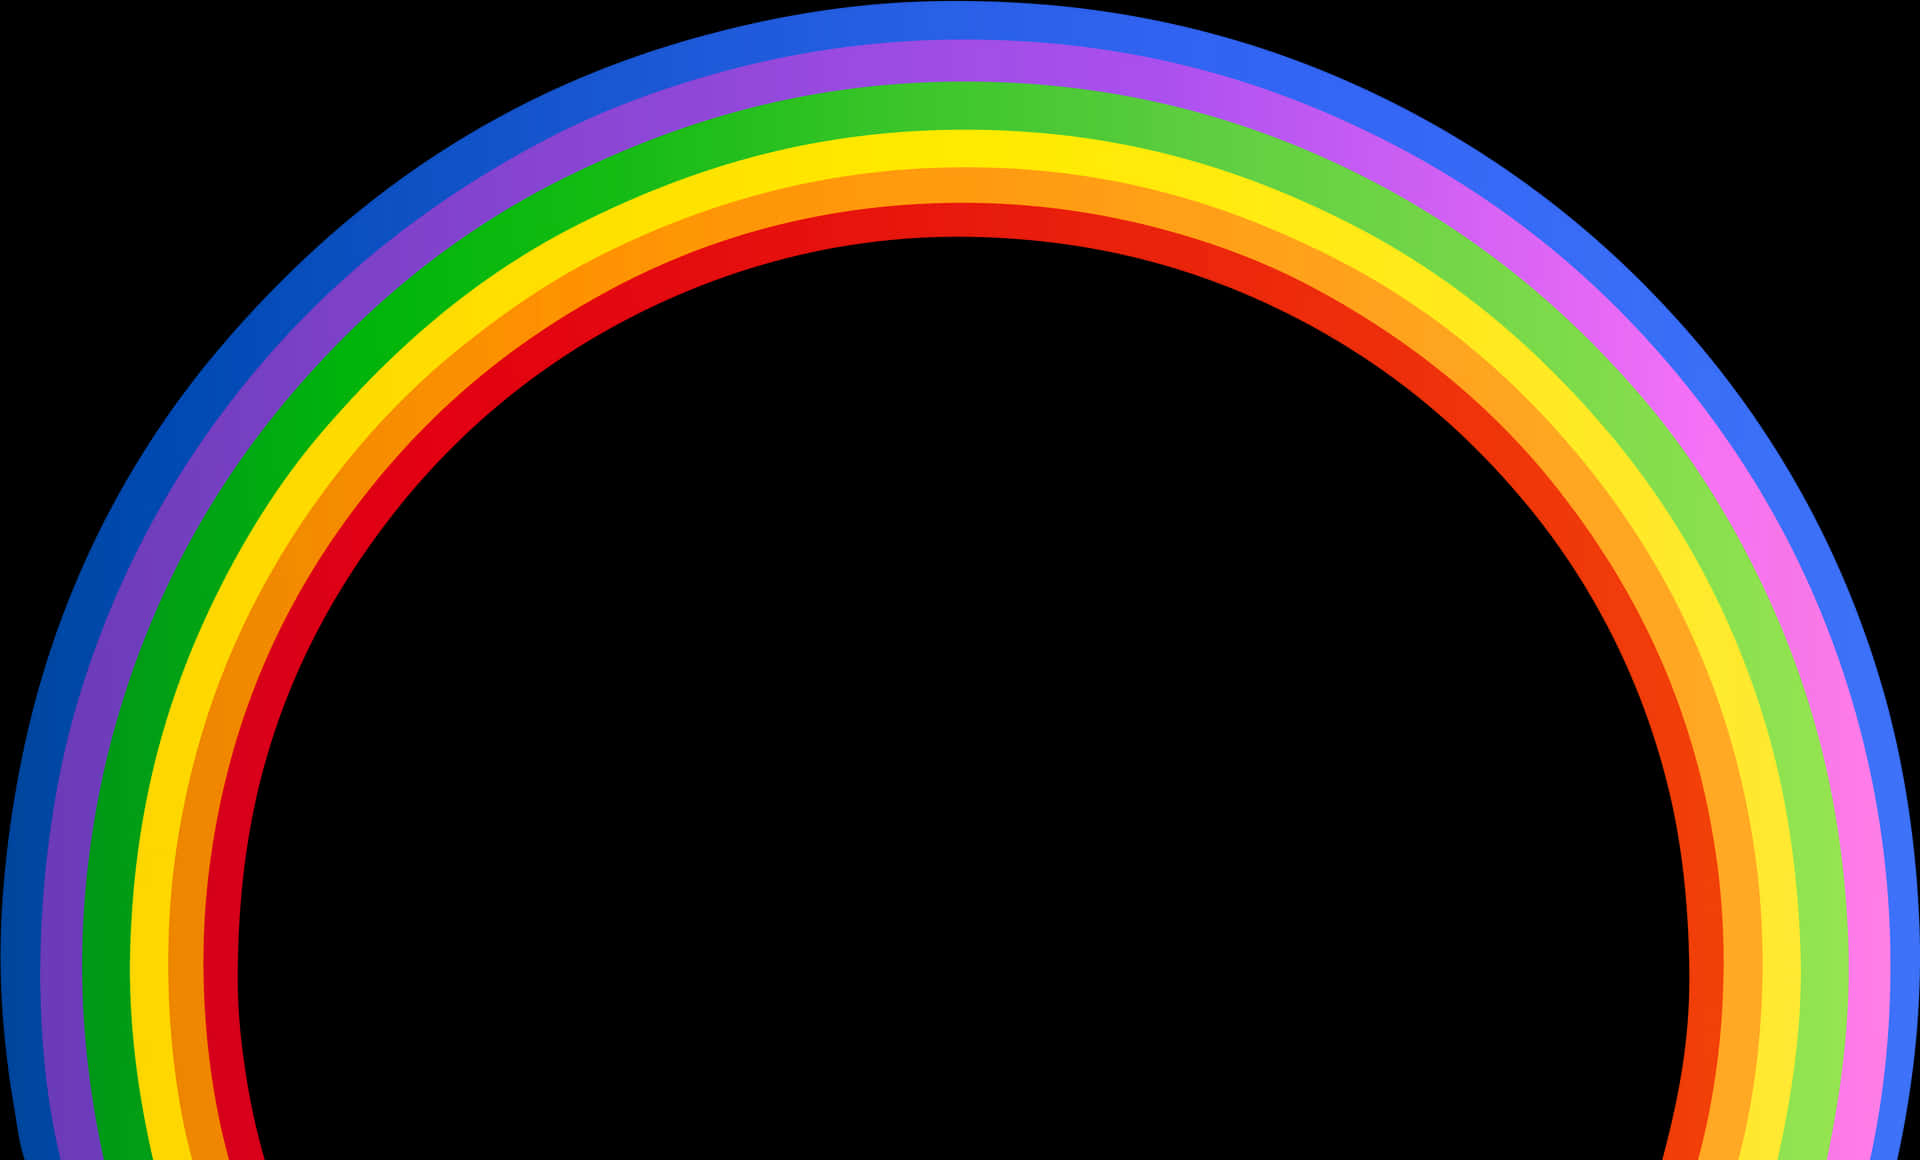 Vibrant Rainbow Arc PNG image